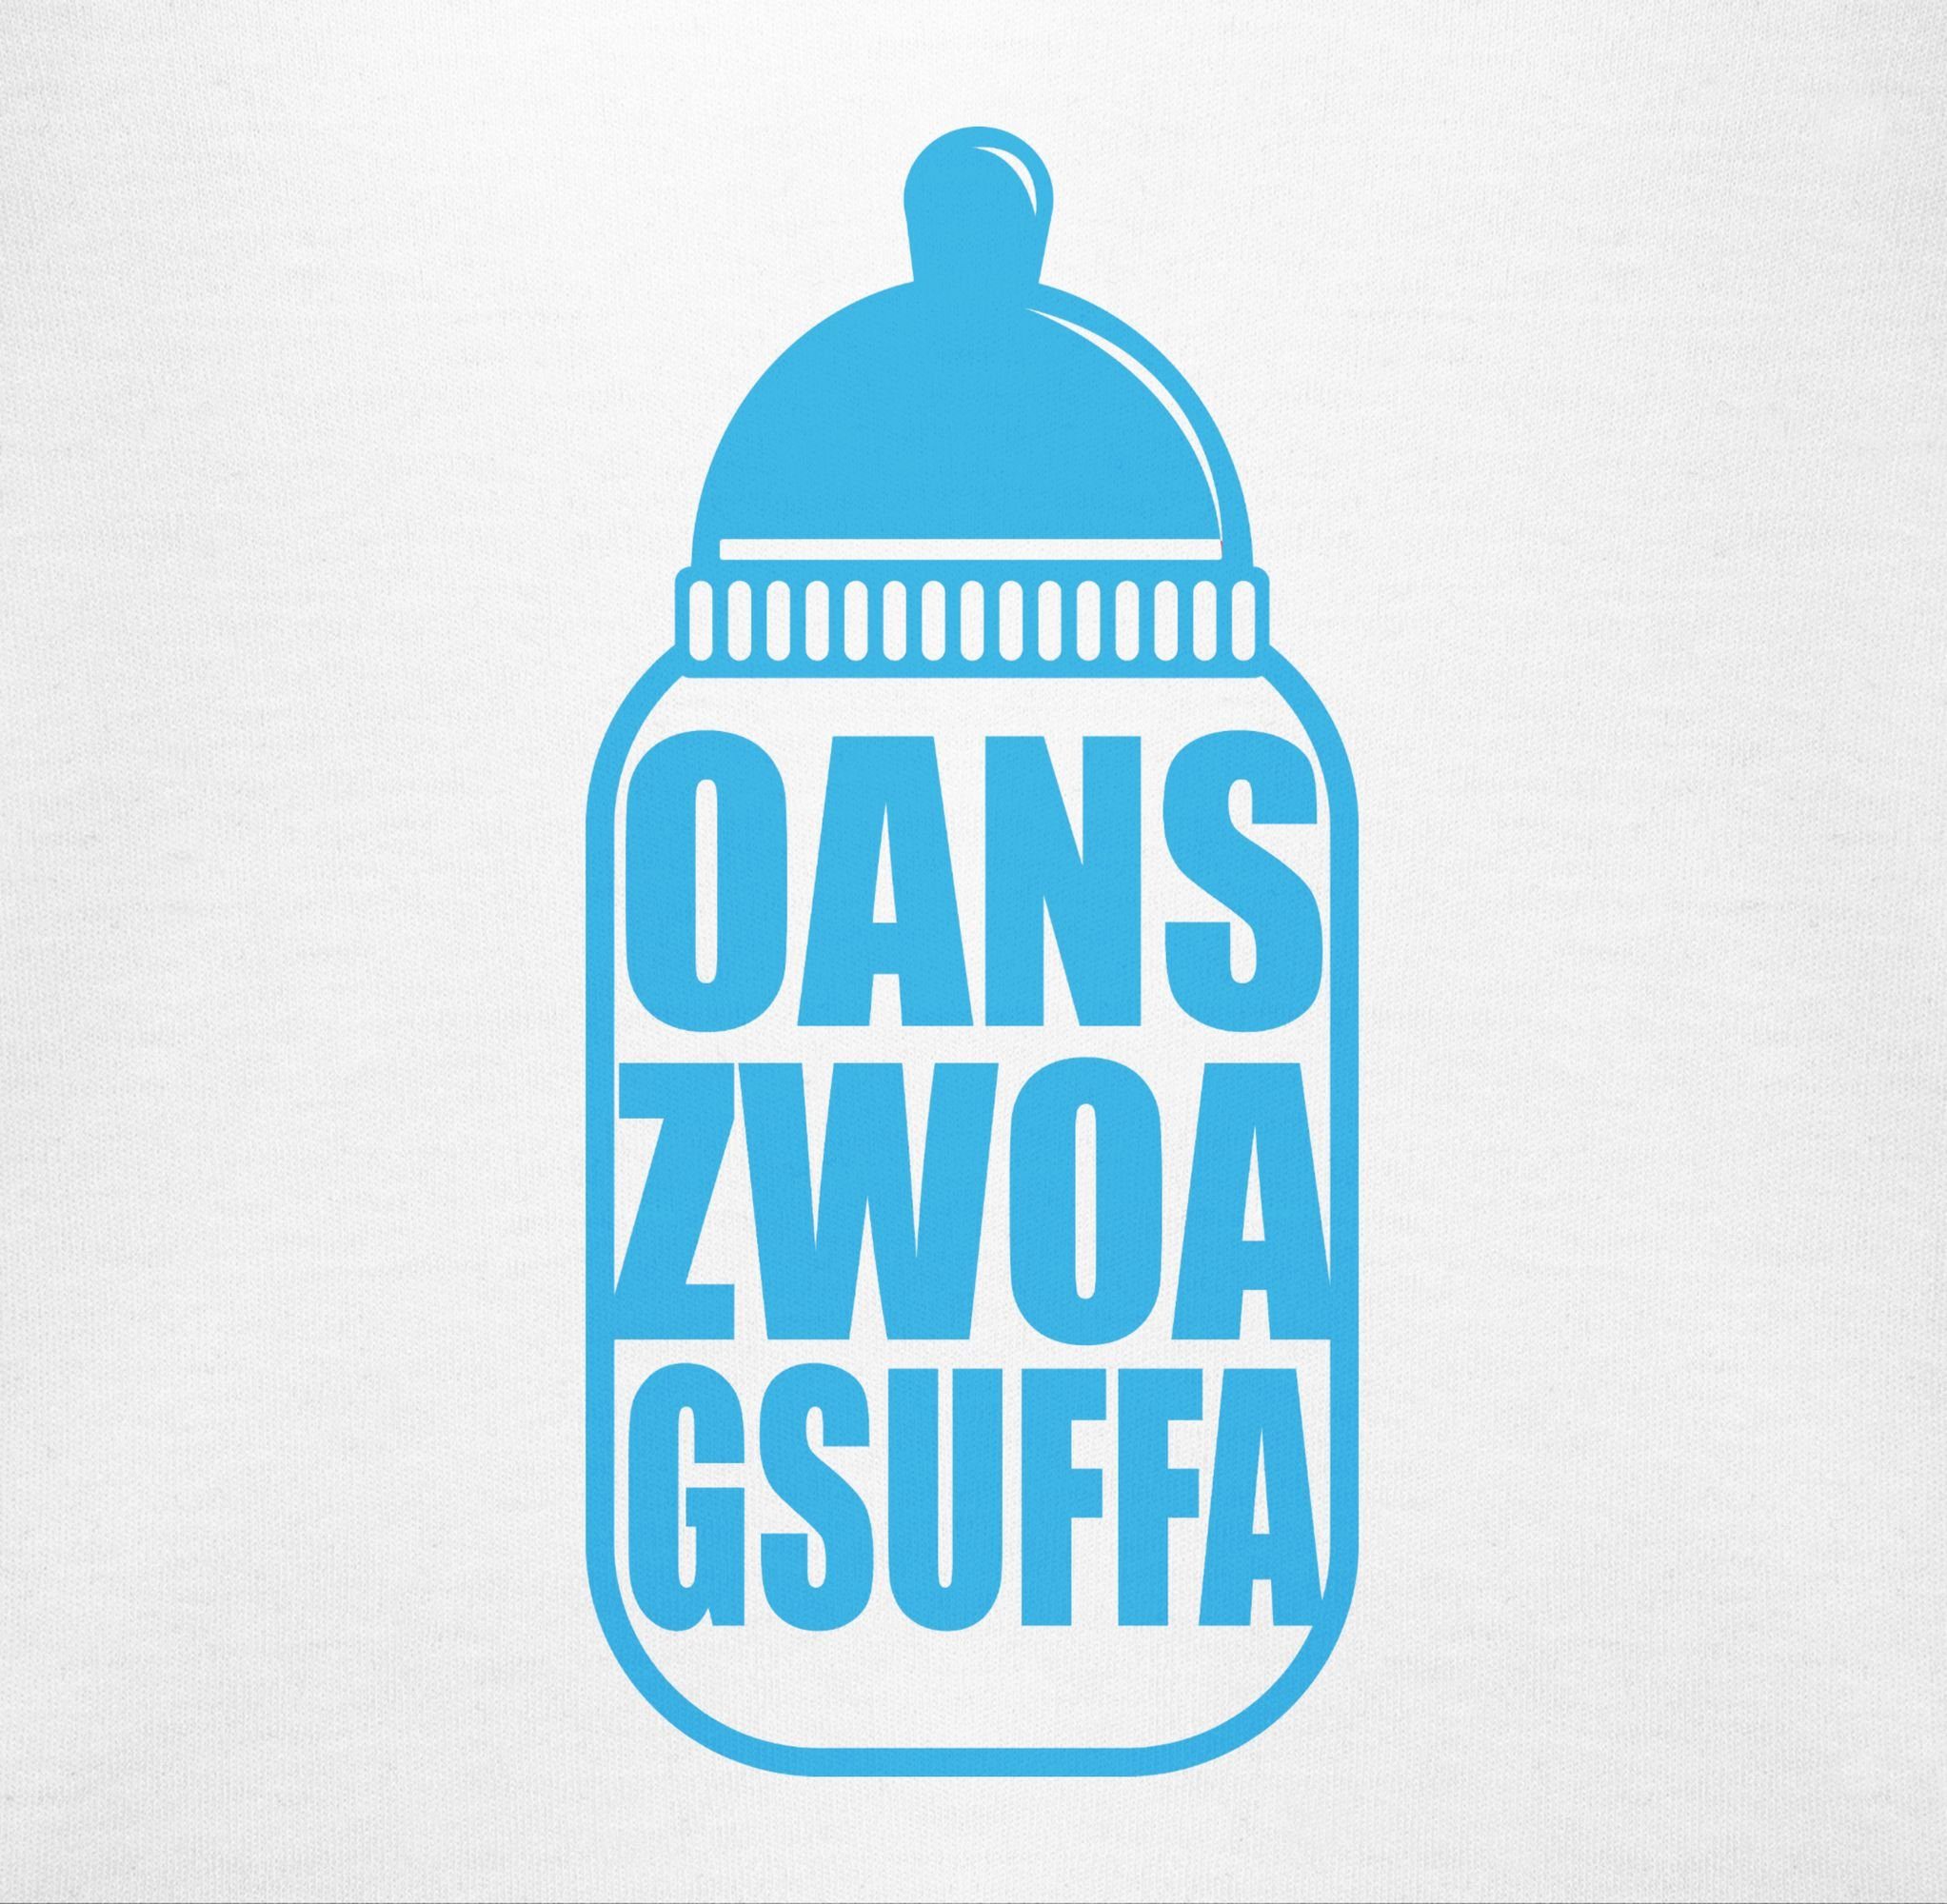 Shirtracer Oans Gsuffa Zwoa Weiß blau Mode Outfit für 2 Shirtbody Oktoberfest Babyflasche Baby